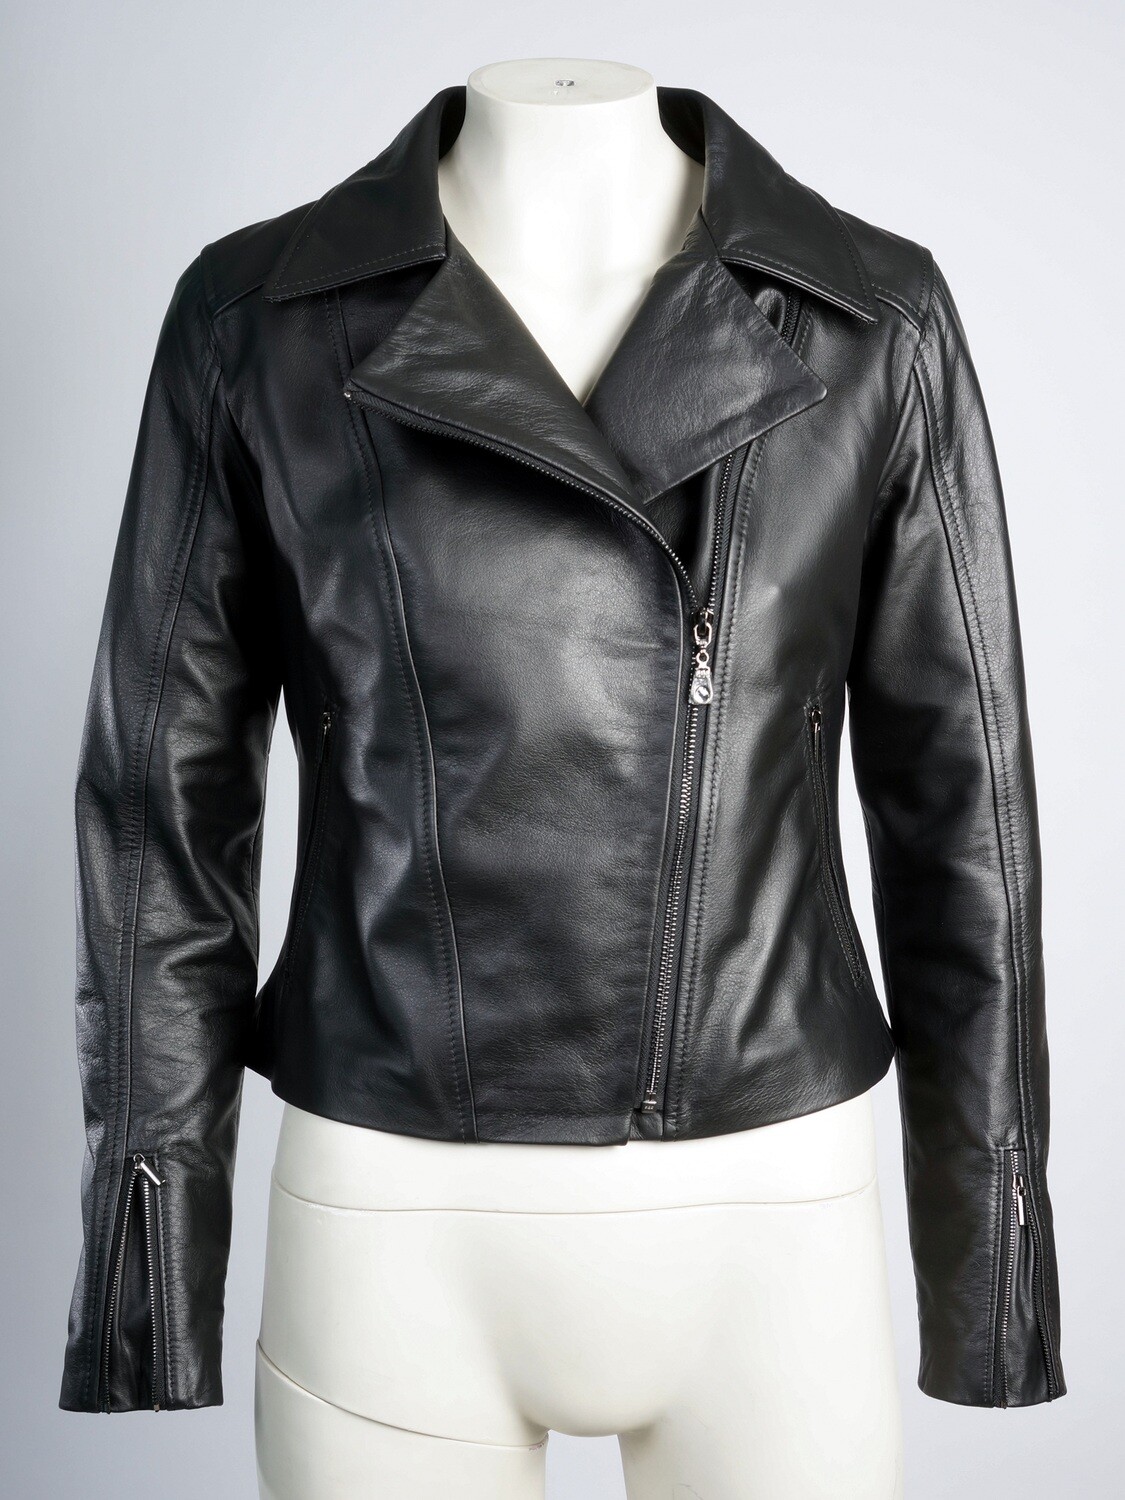 Leather Woman Black Jacket